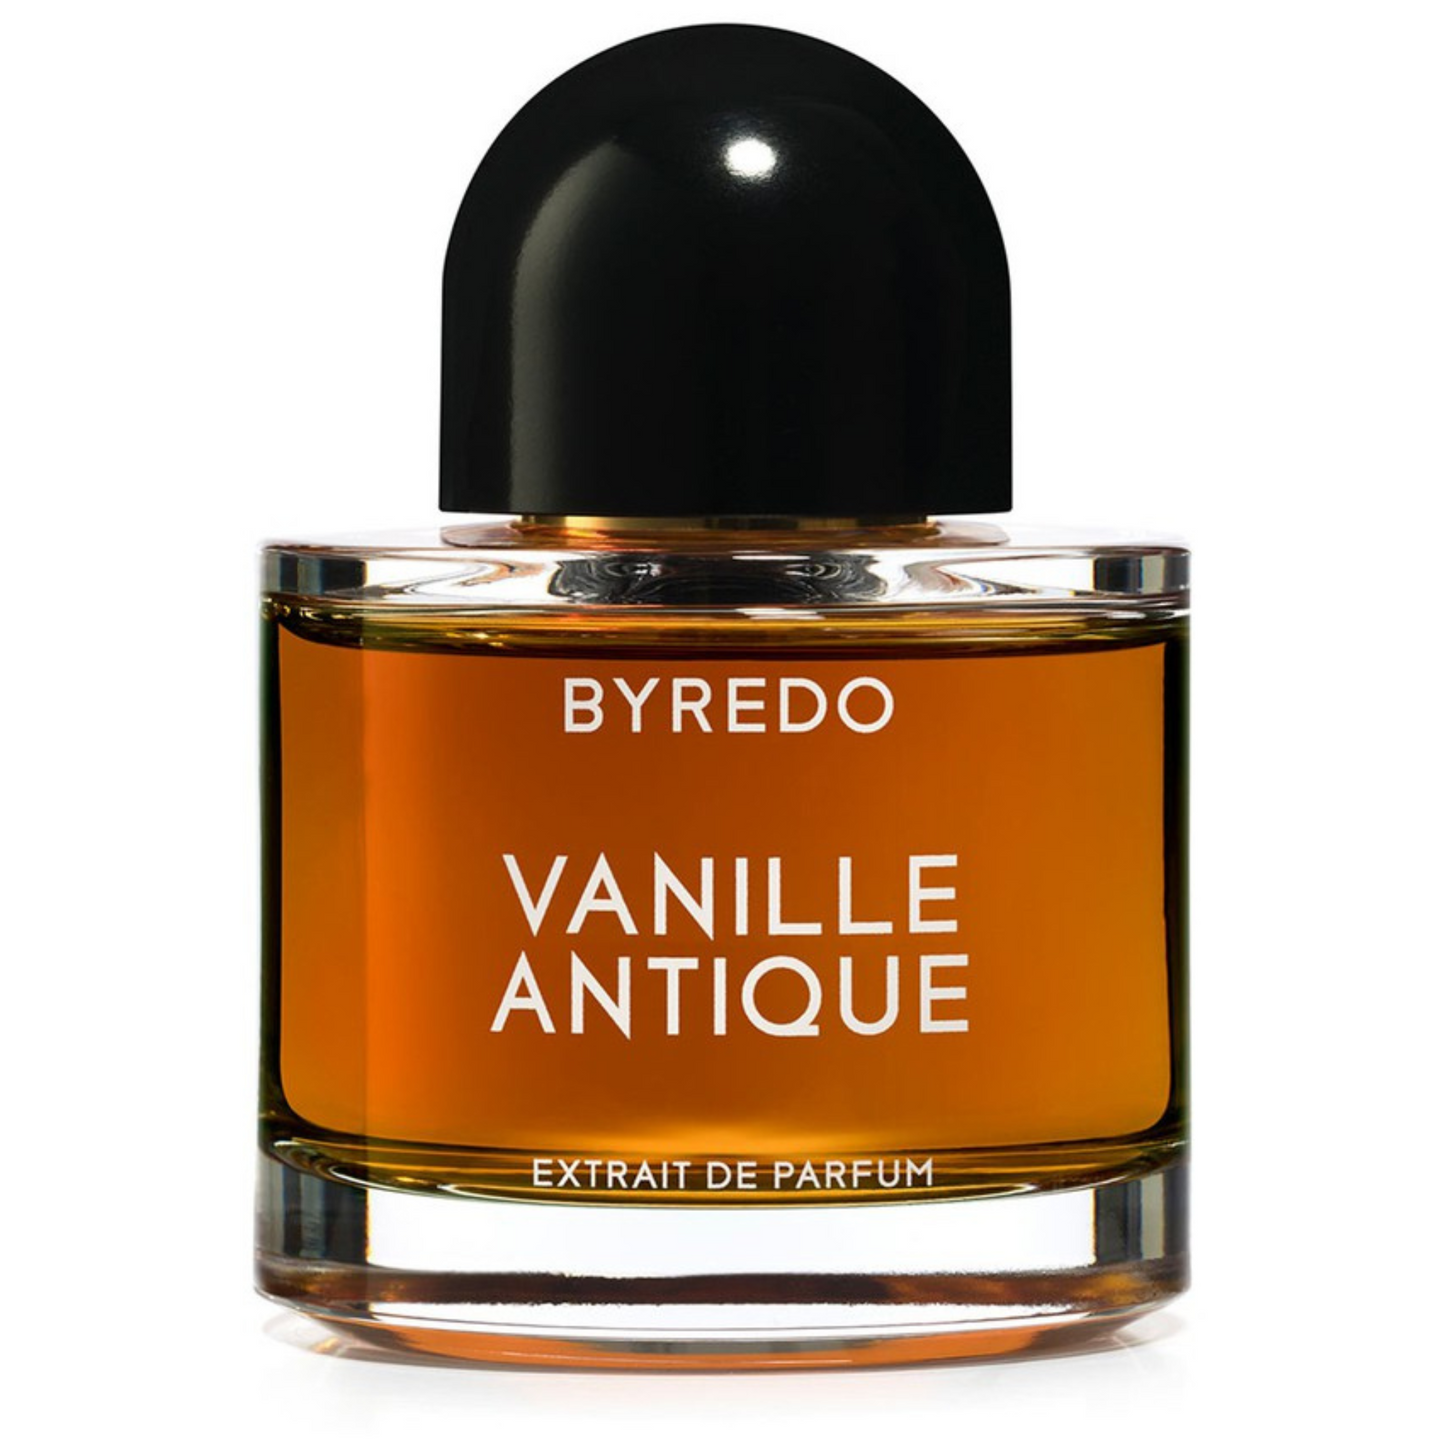 Primary Image of Vanille Antique (Night Veils) Perfume Extract